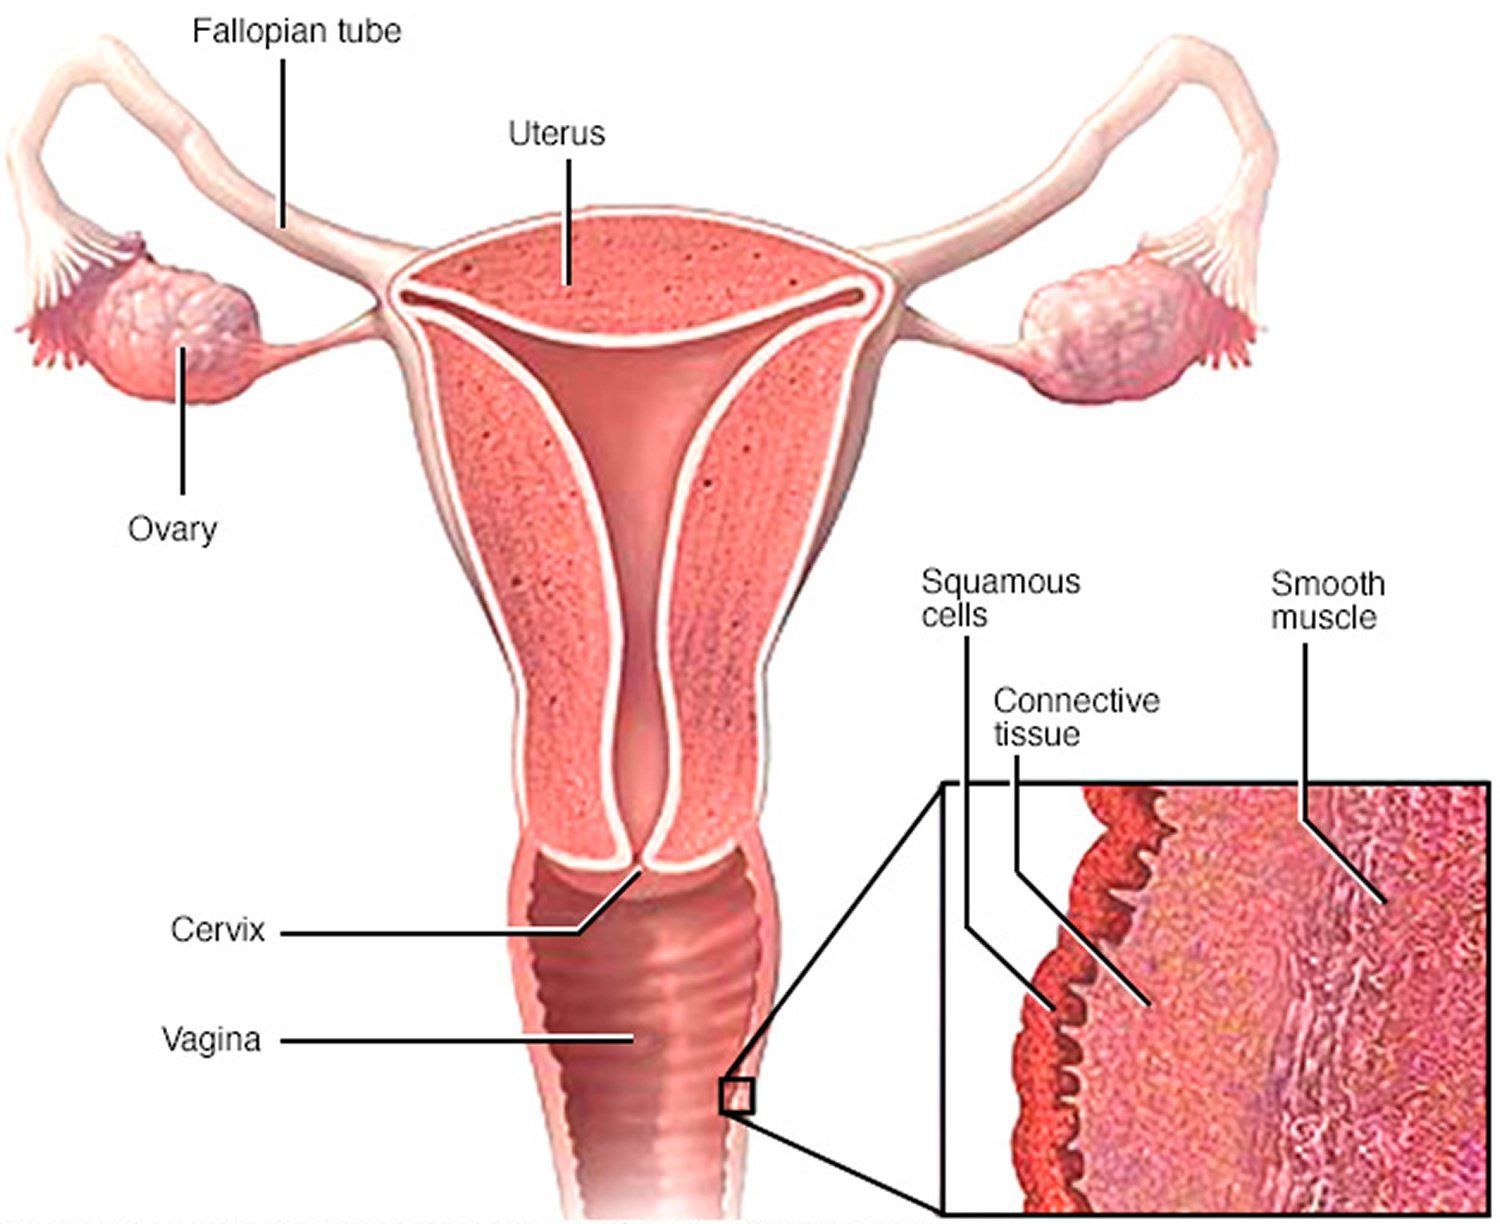 Cervix and vagina squamous cells